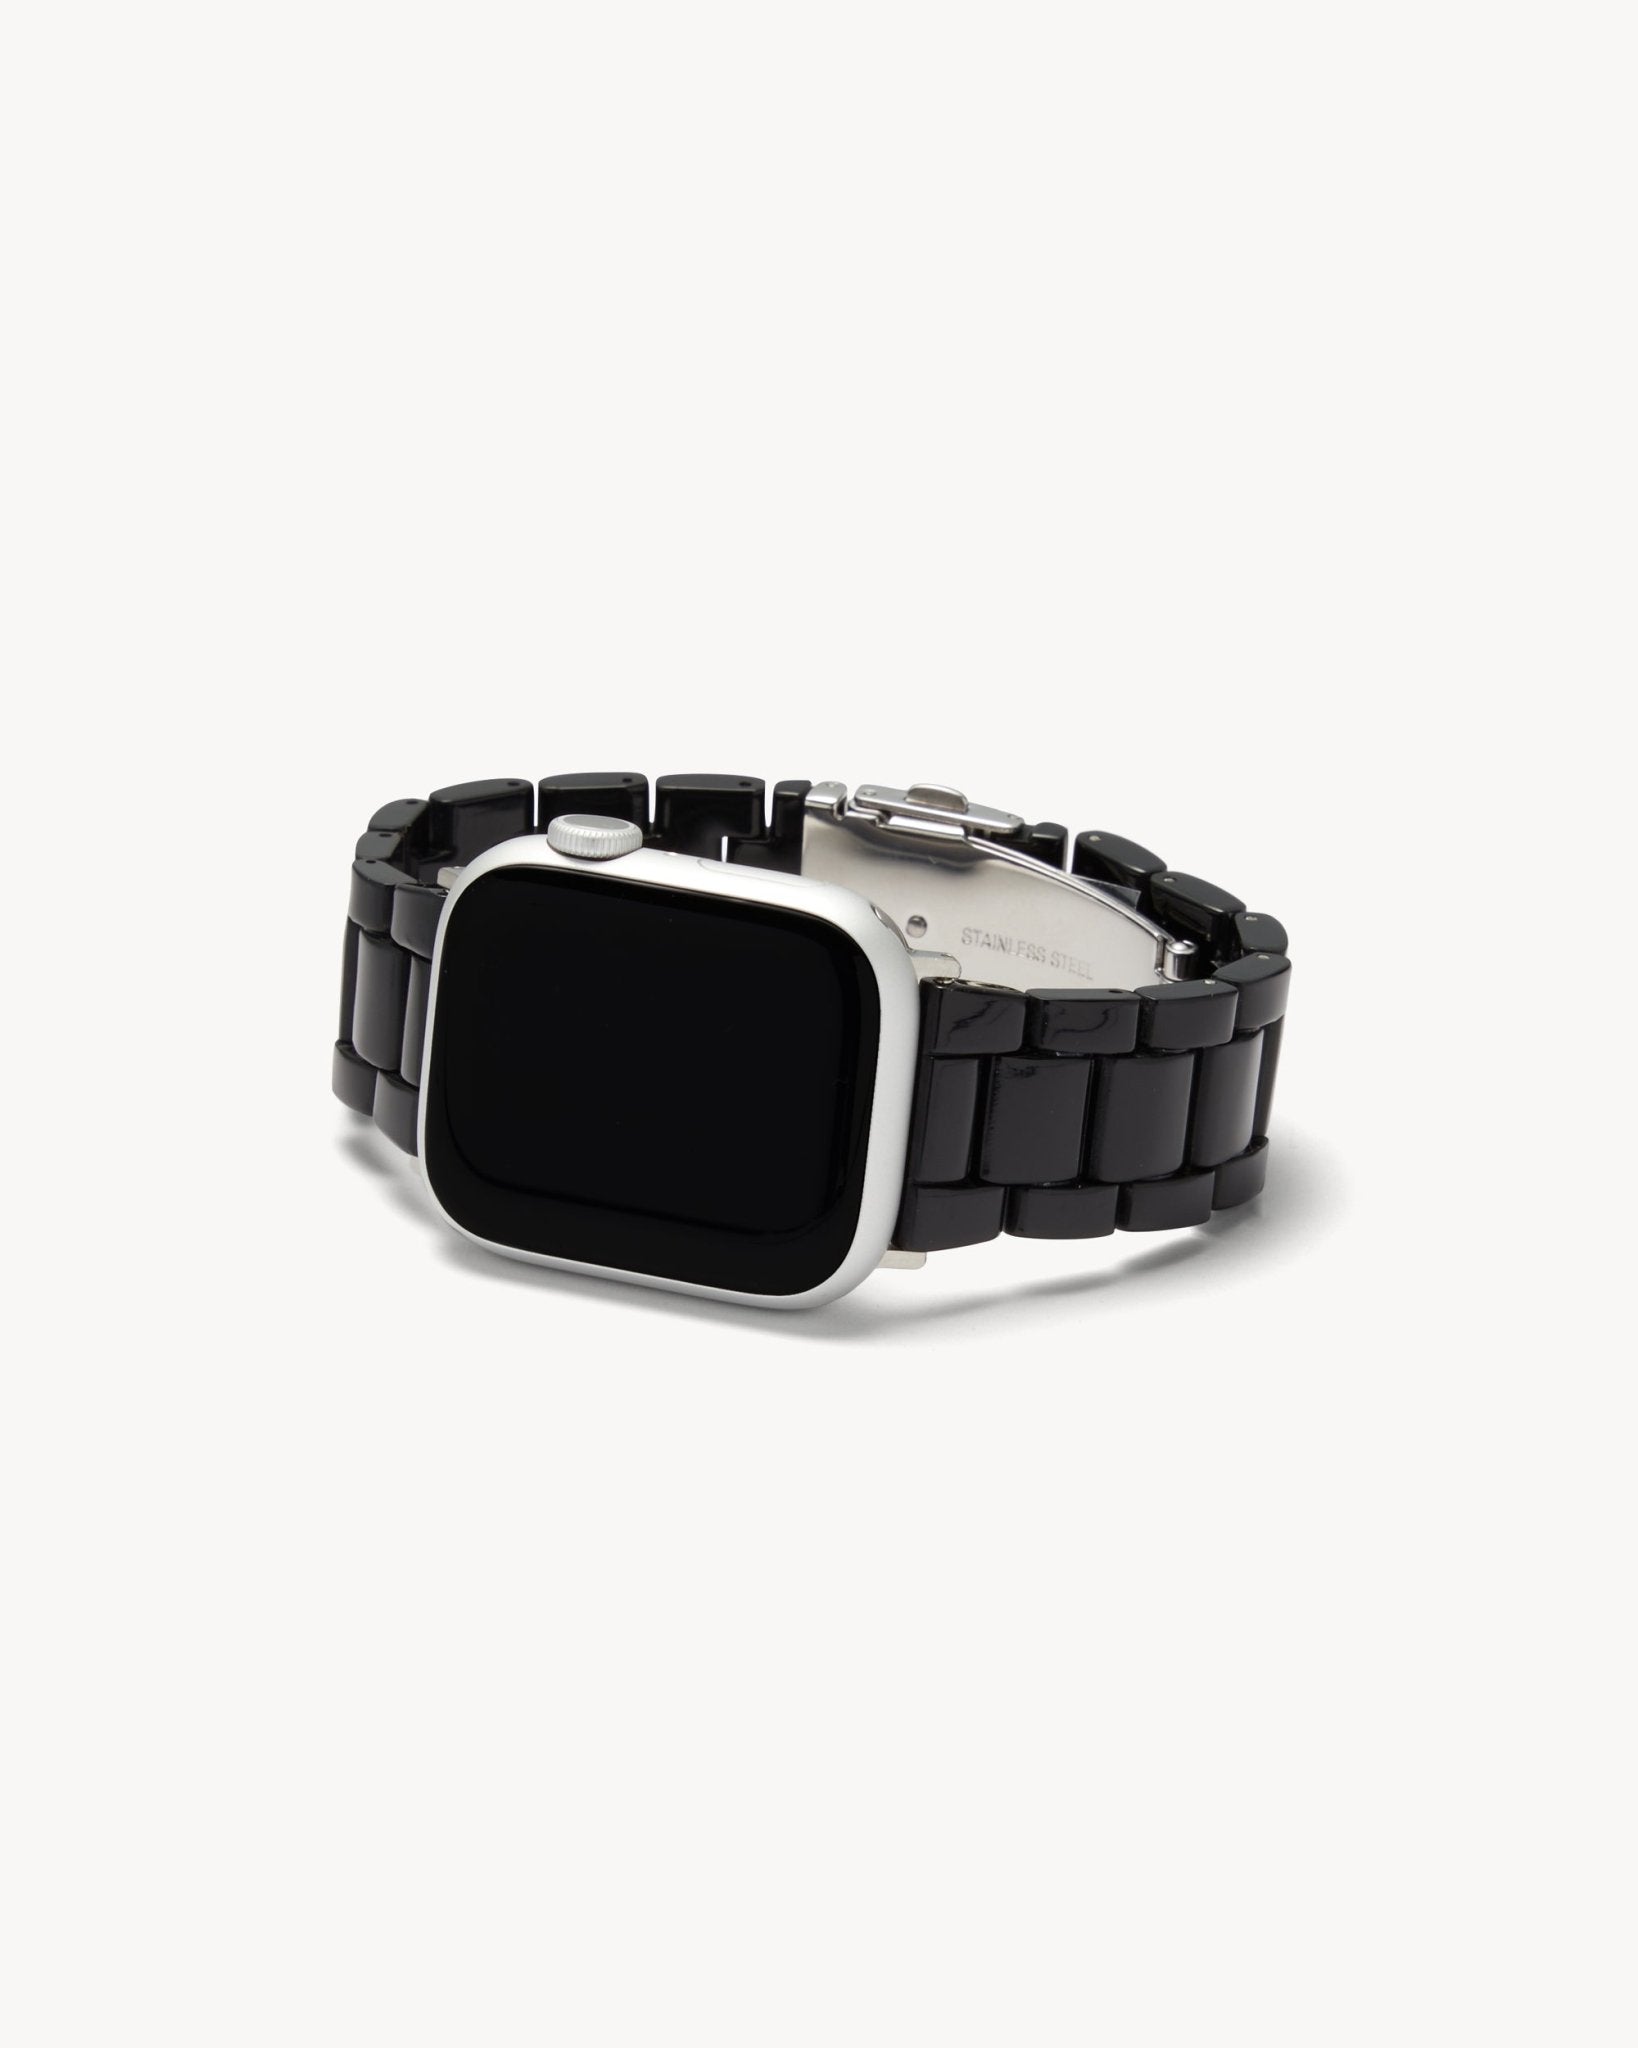 MACHETE Deluxe Apple Watch Band Set in Black